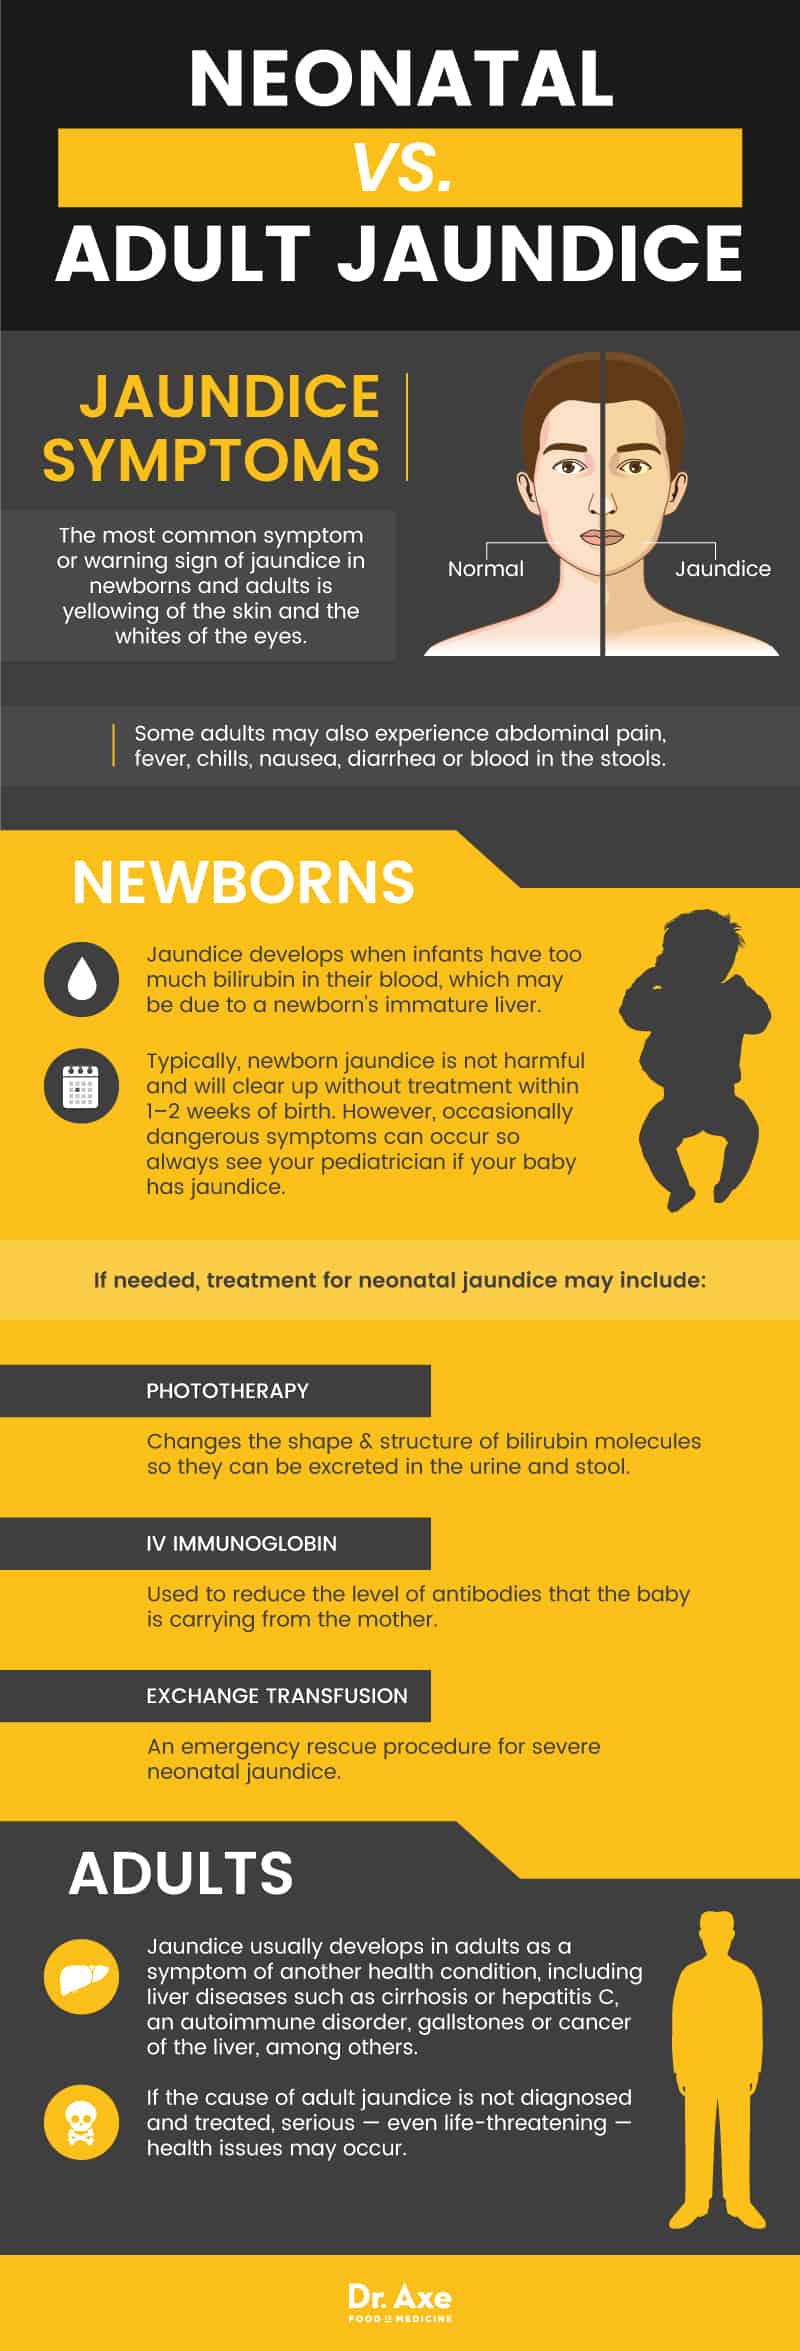 Neonatal vs. adult jaundice - Dr. Axe